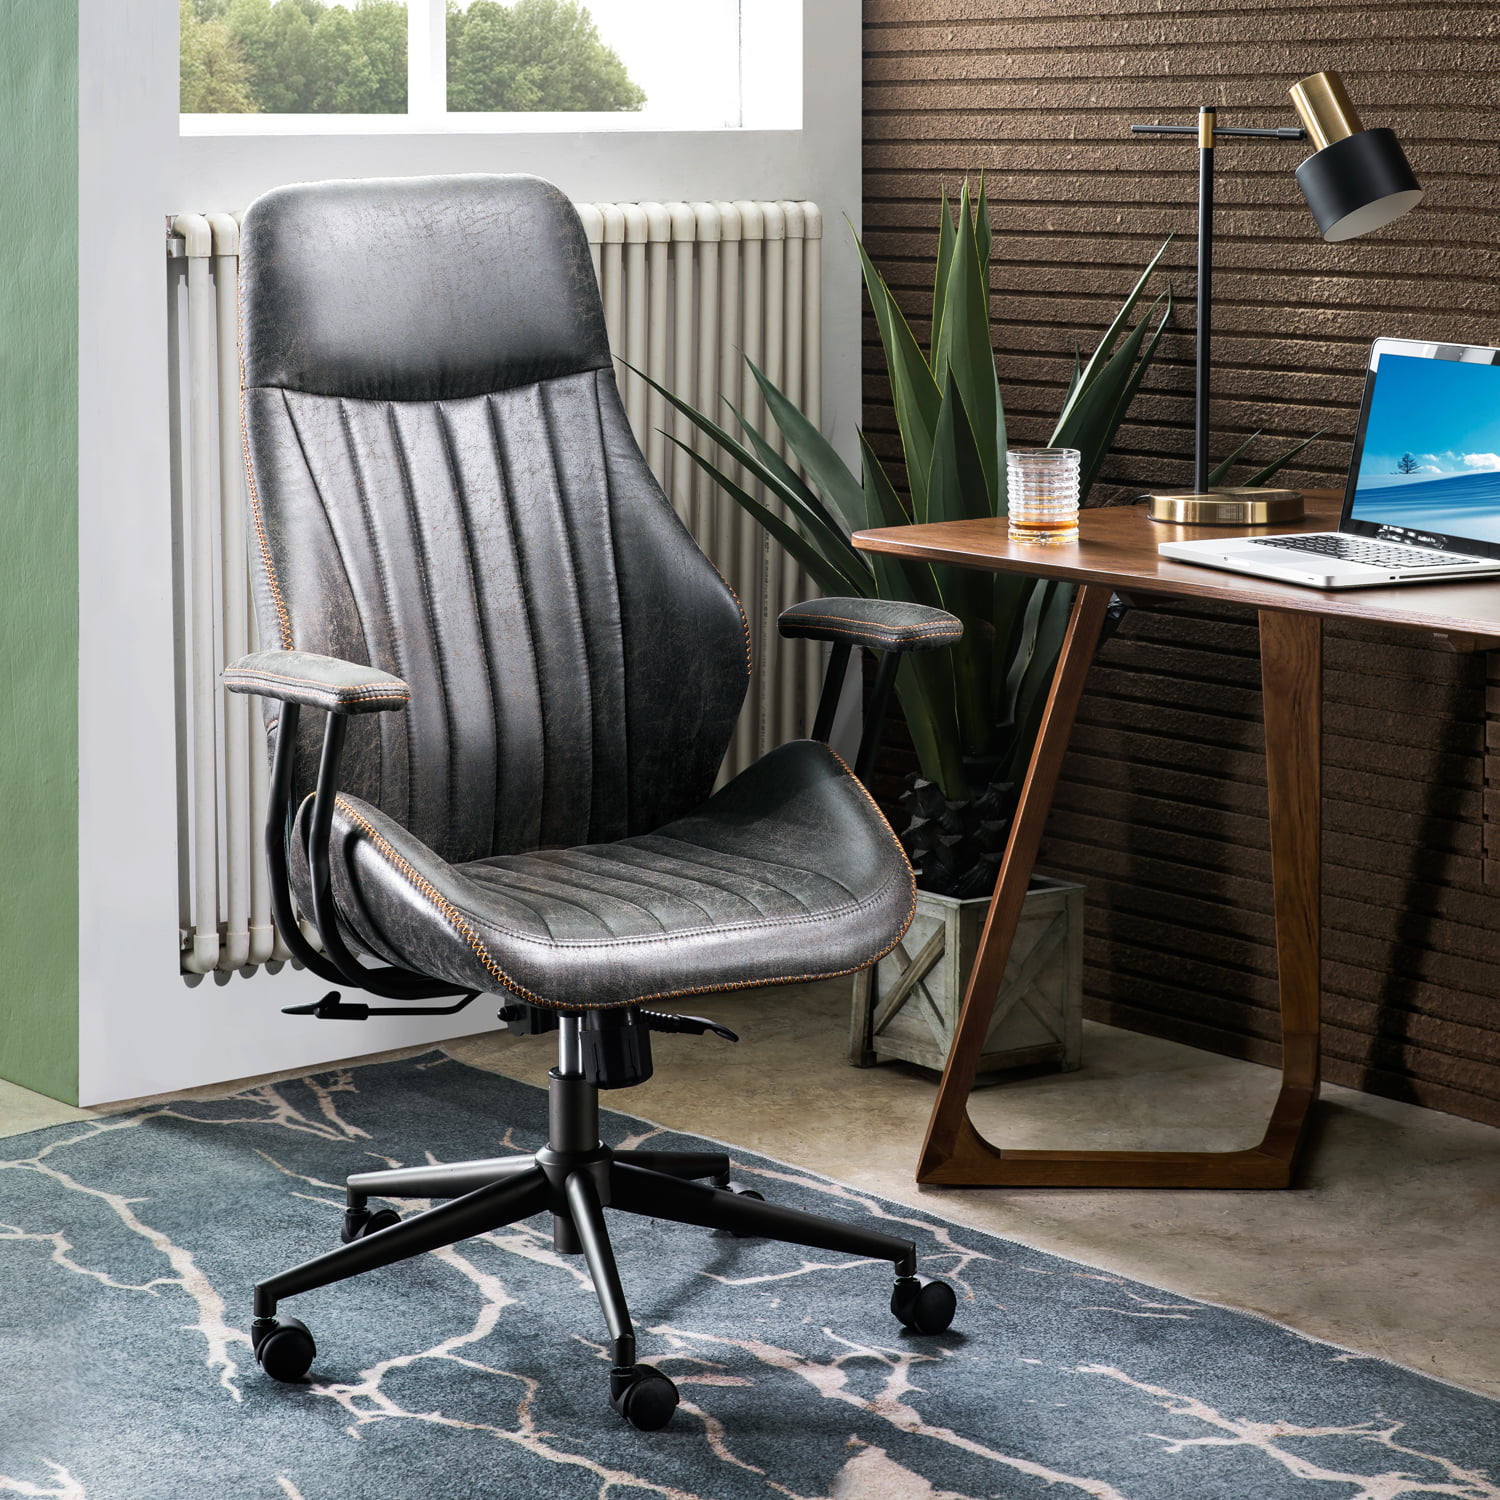 ovios Ergonomic Office Chair,Modern Computer Desk Chair,high Back Suede